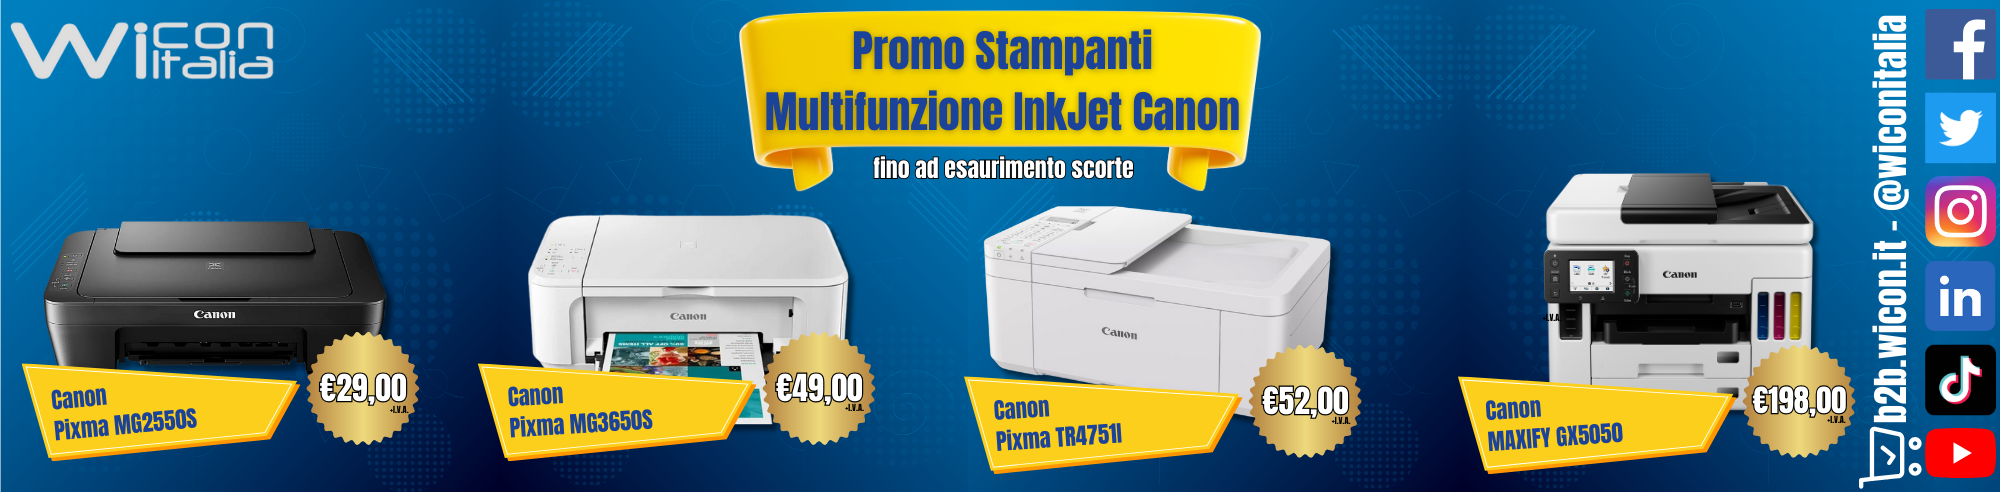 Promo Stampanti Multifunzione InkJet Canon